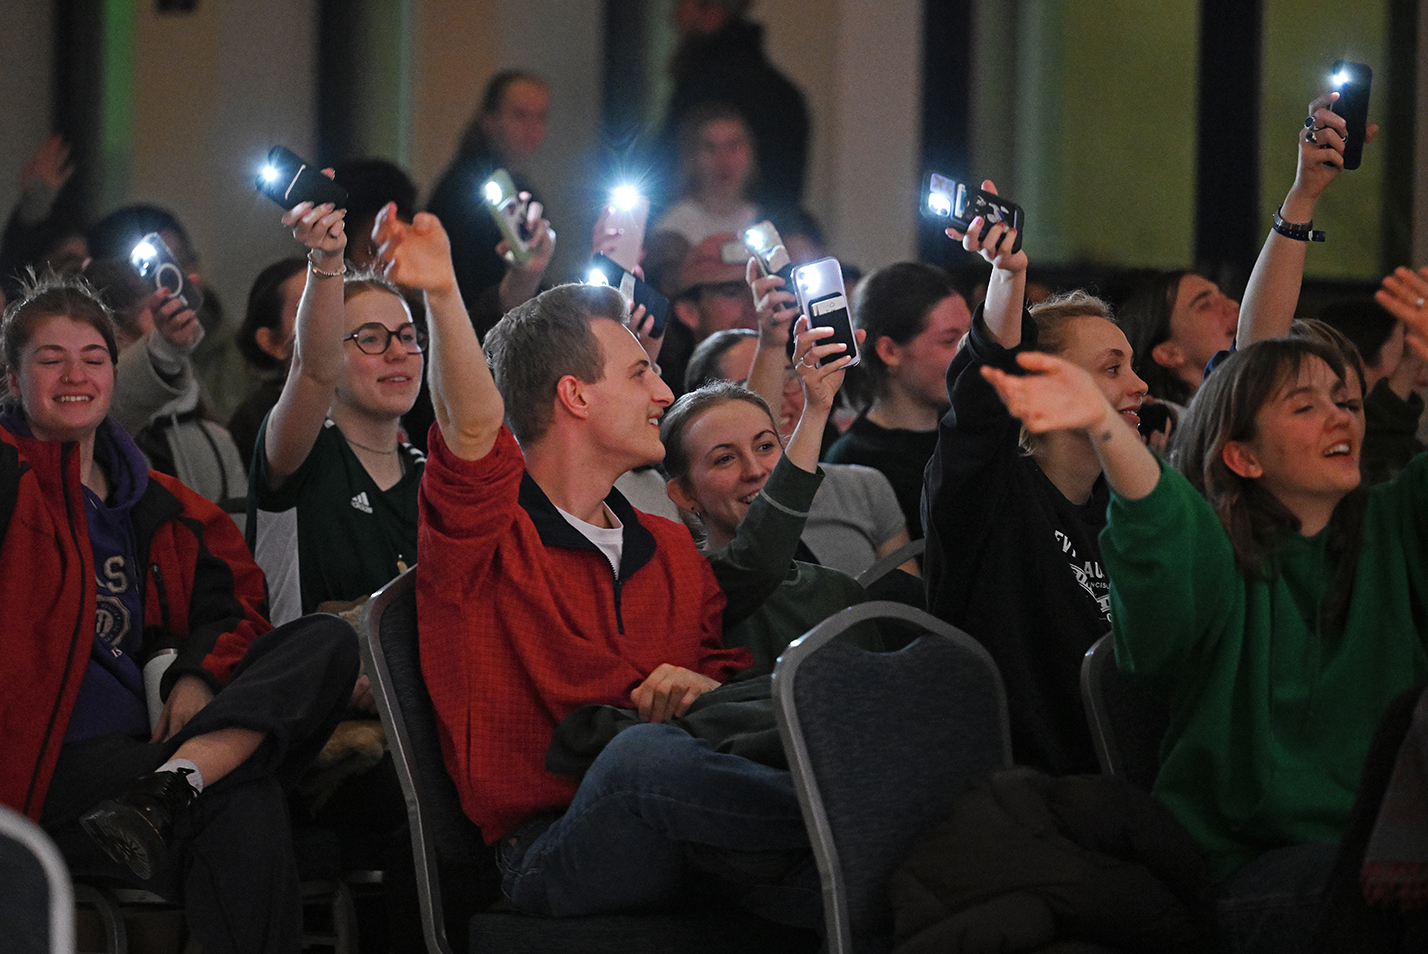 Crowd of students waving camera phone flashlights.